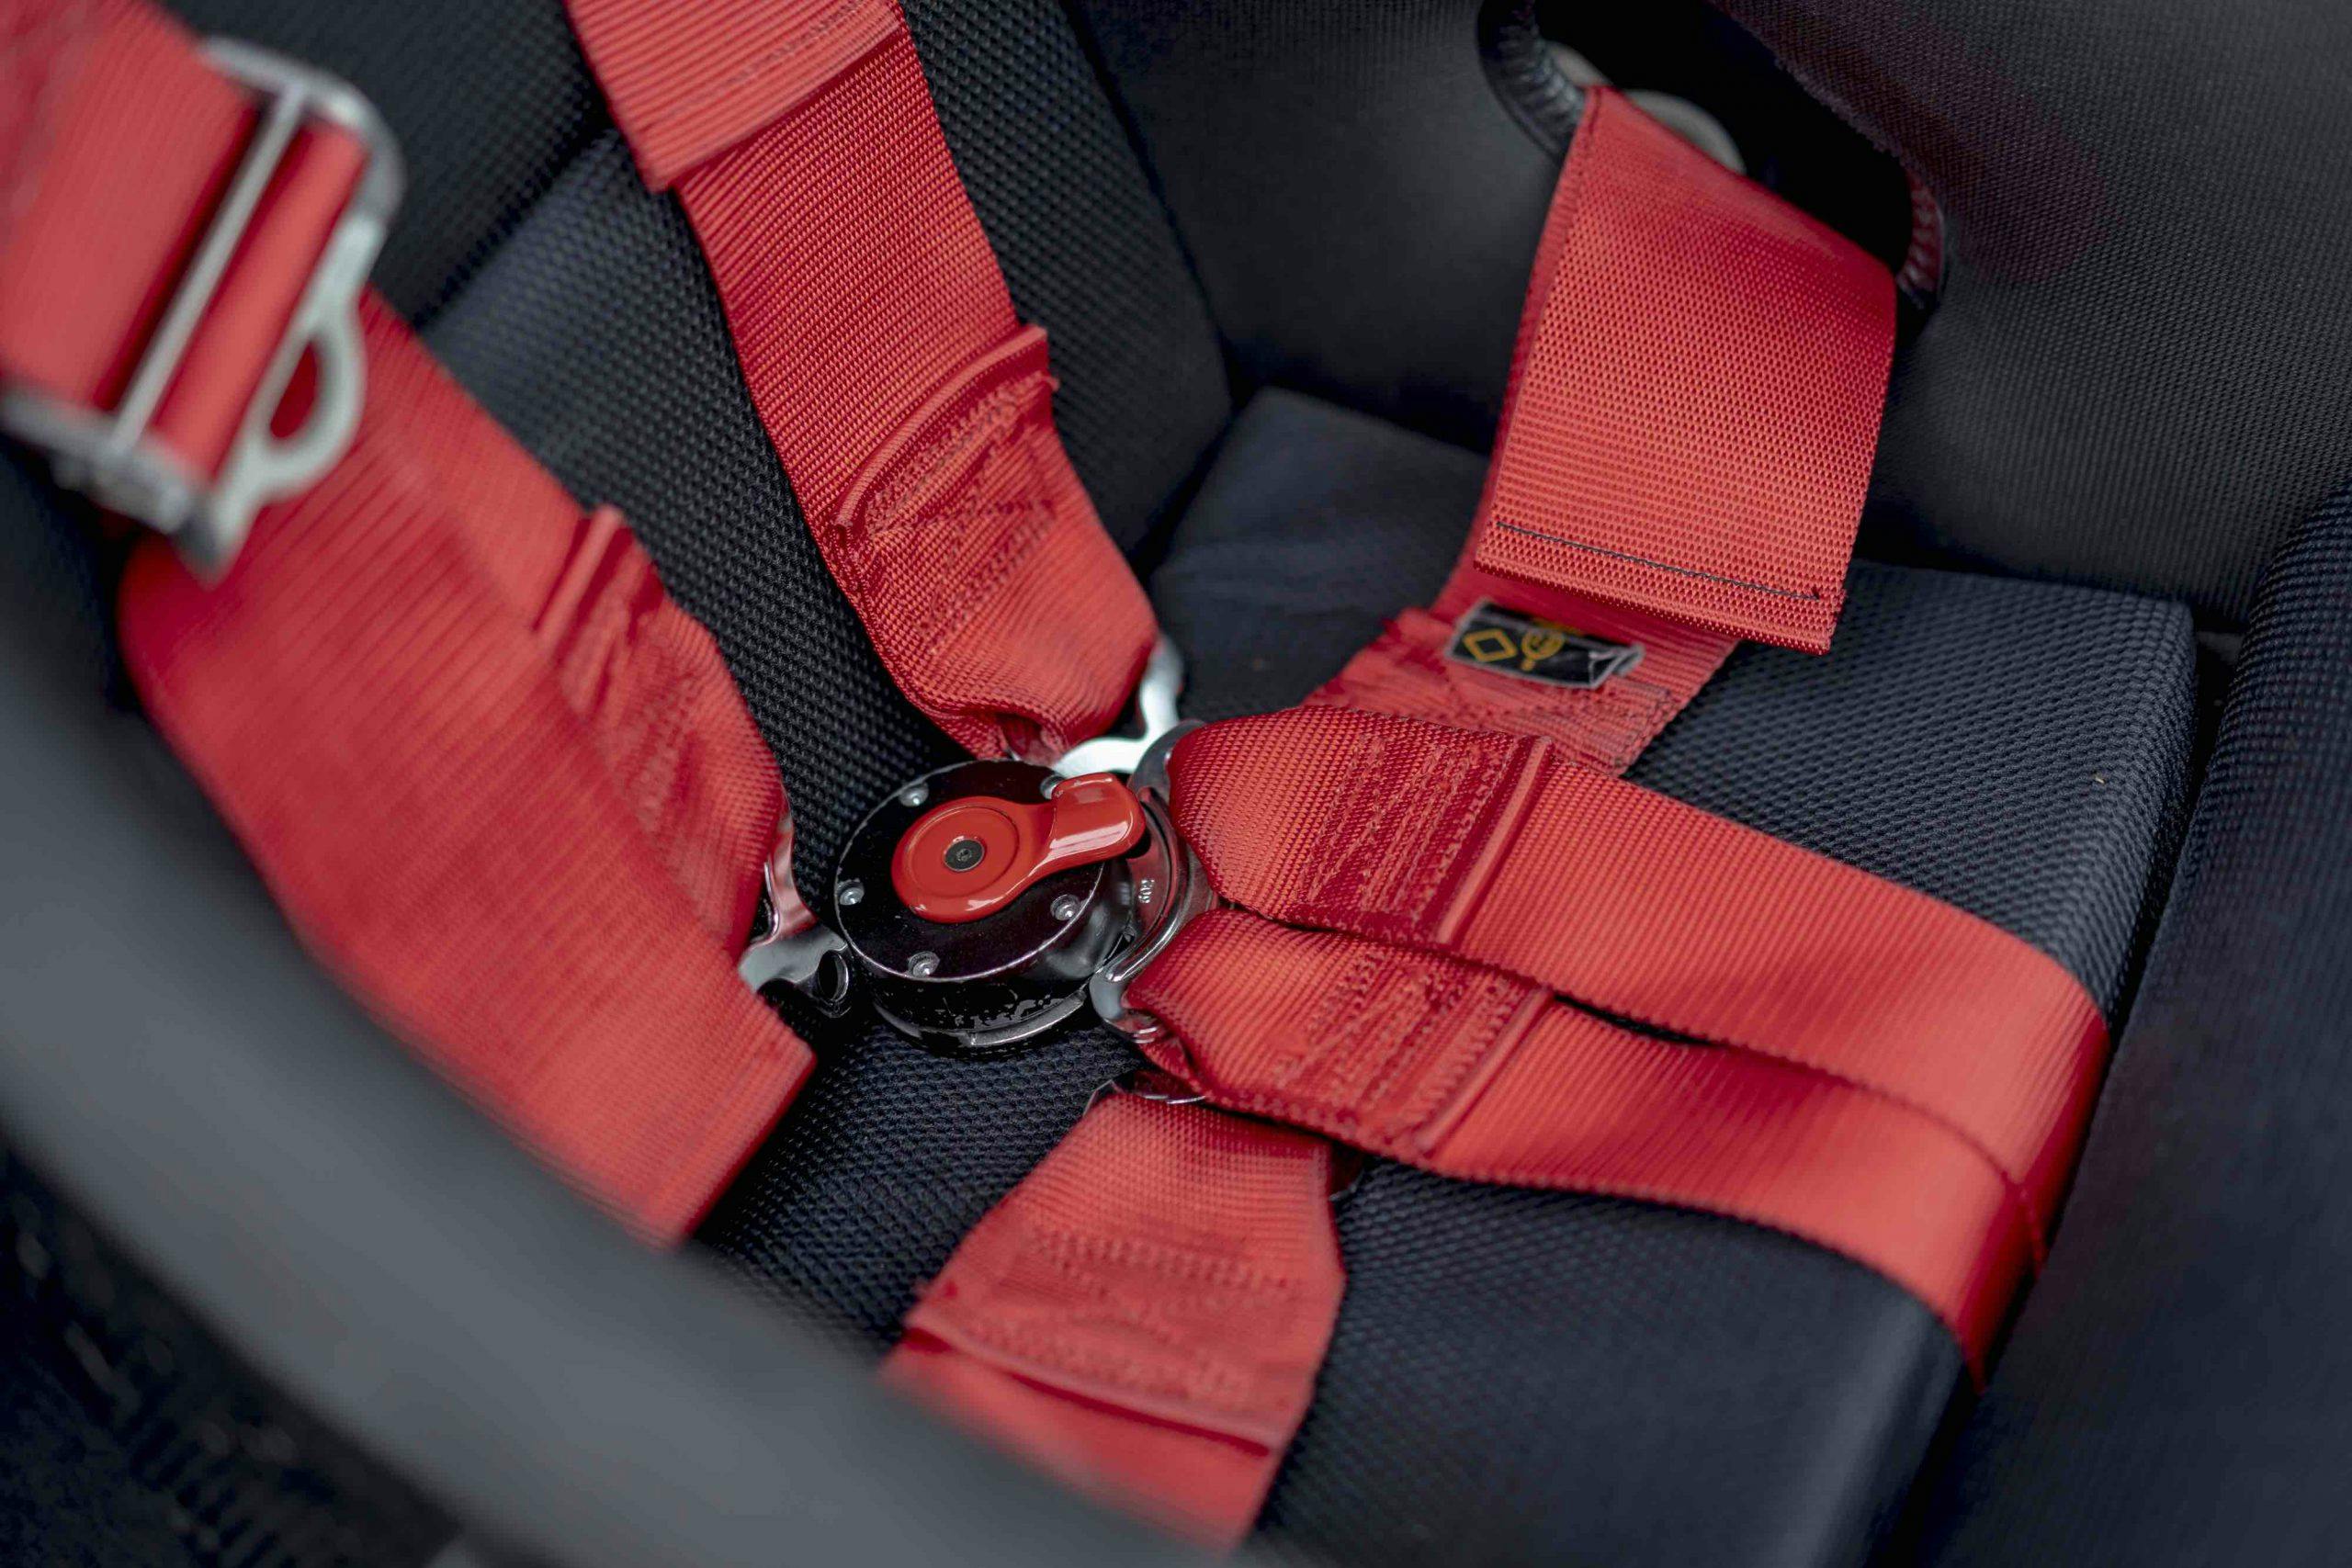 Renault Megane R26R interior seatbelt harness detail